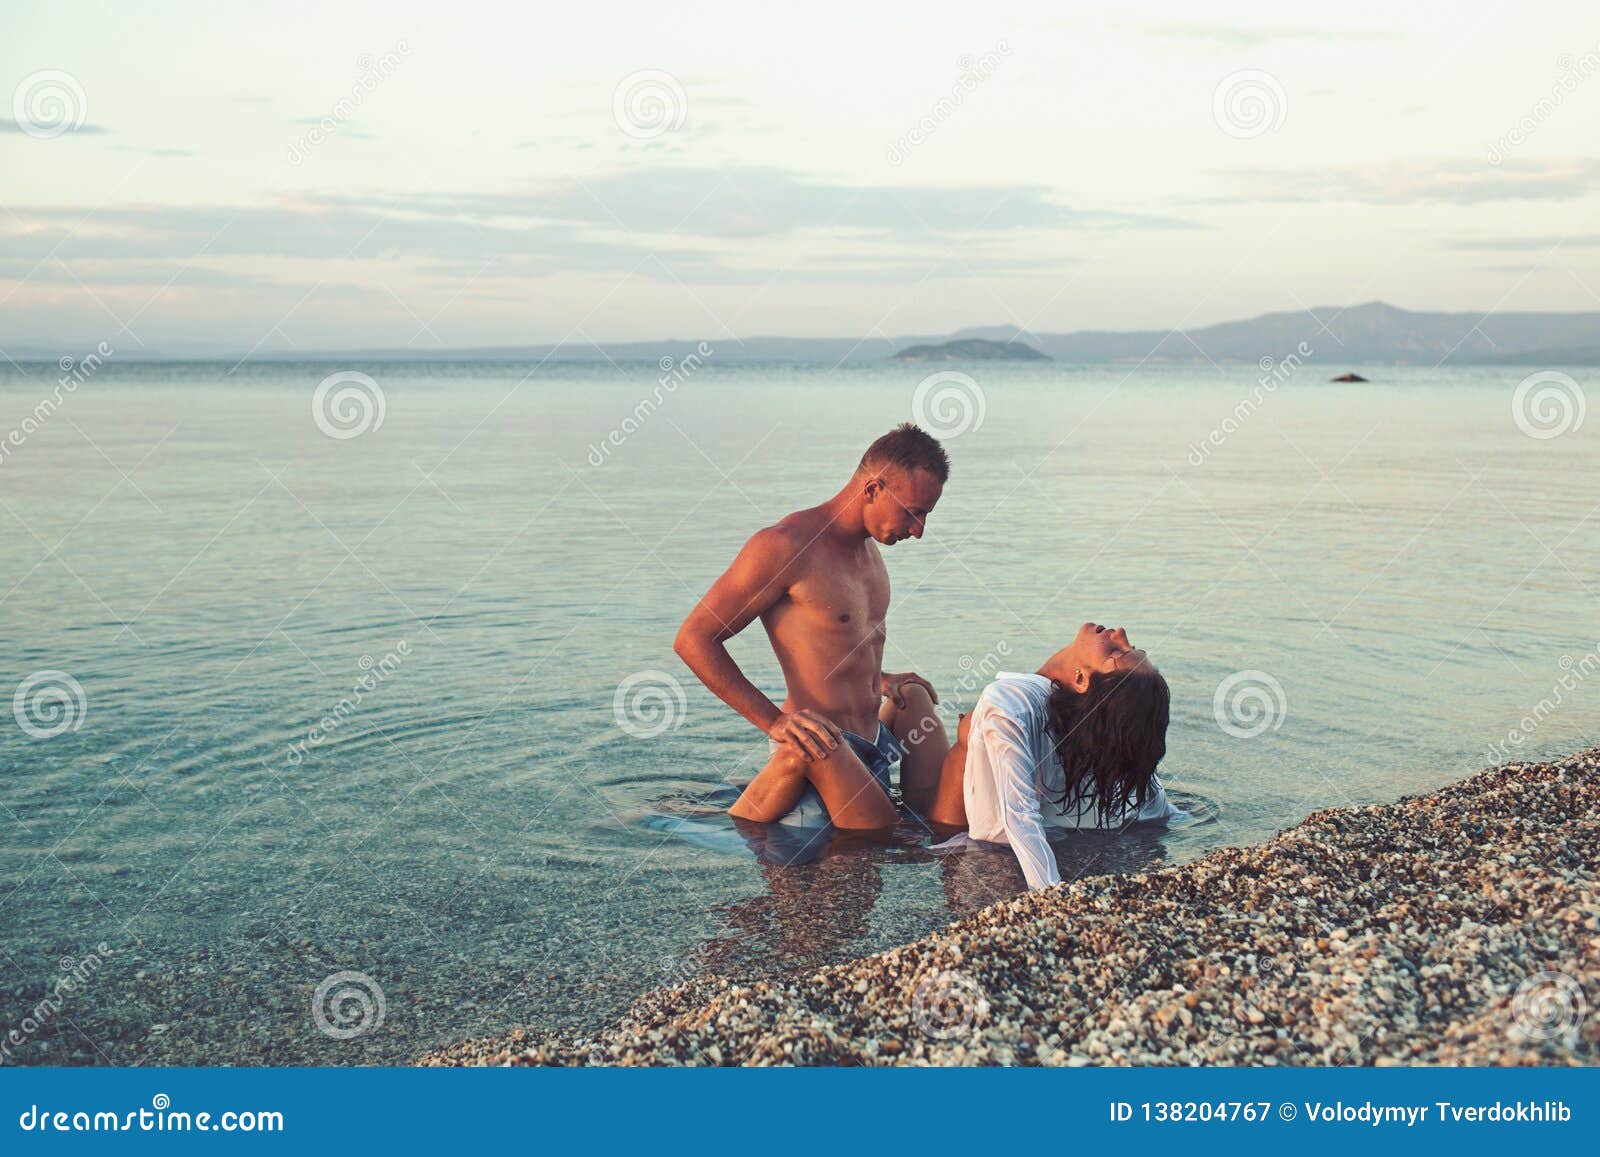 Nude beach couple